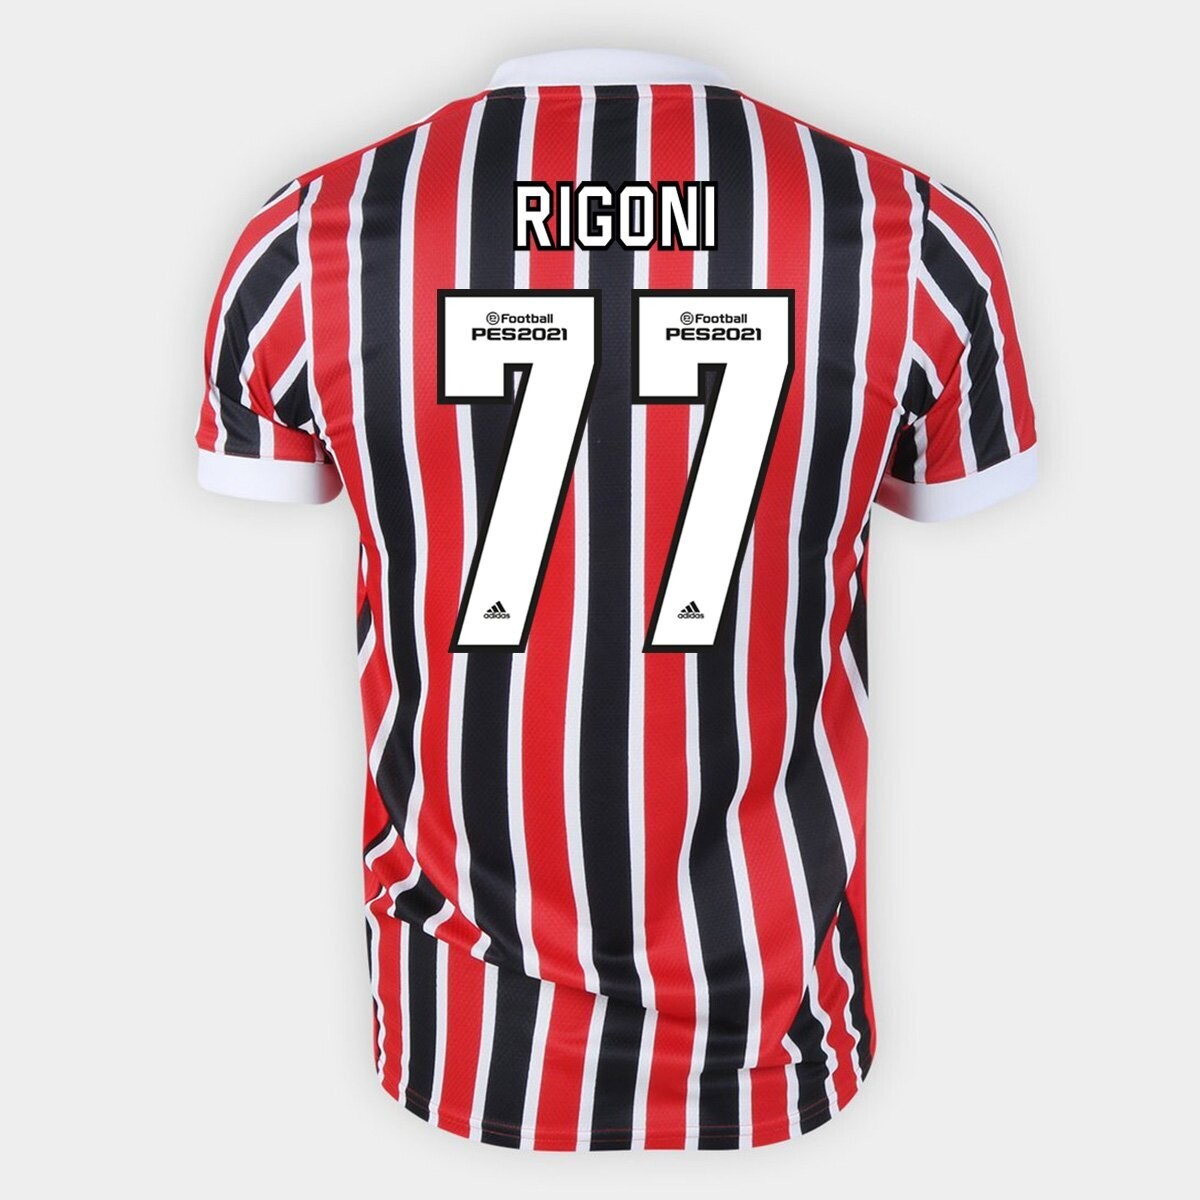 Sao Paulo FC Rigoni 77 Away Jersey 21/22